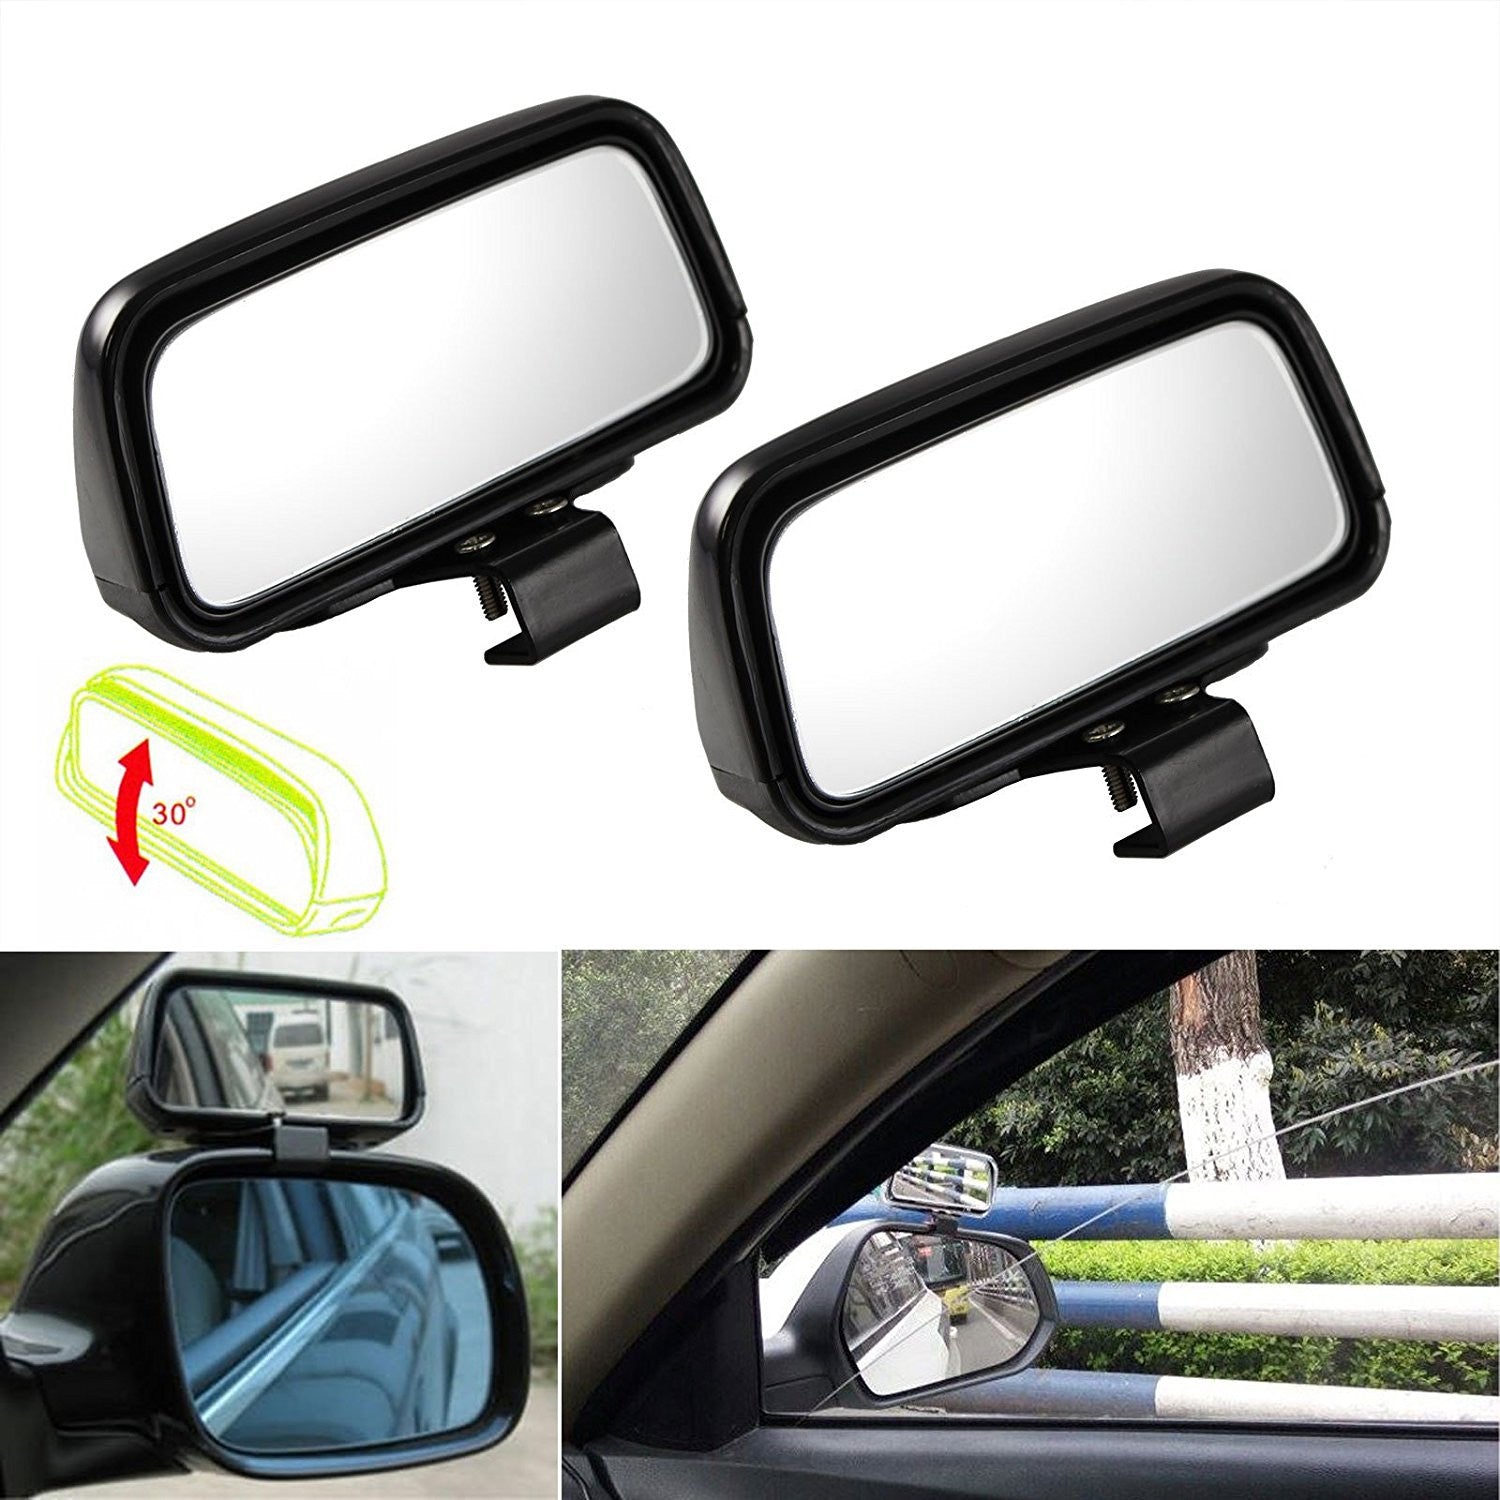 Utopicar Blind Spot Car Mirror - Convex Blindspot Mirrors for 3x Larger  Image, Engineered Design for Side Mirror (Blindspot), Frameless - Rear View  Blind Spot Mirrors (2 Pack) : Automotive, mirror's edge 